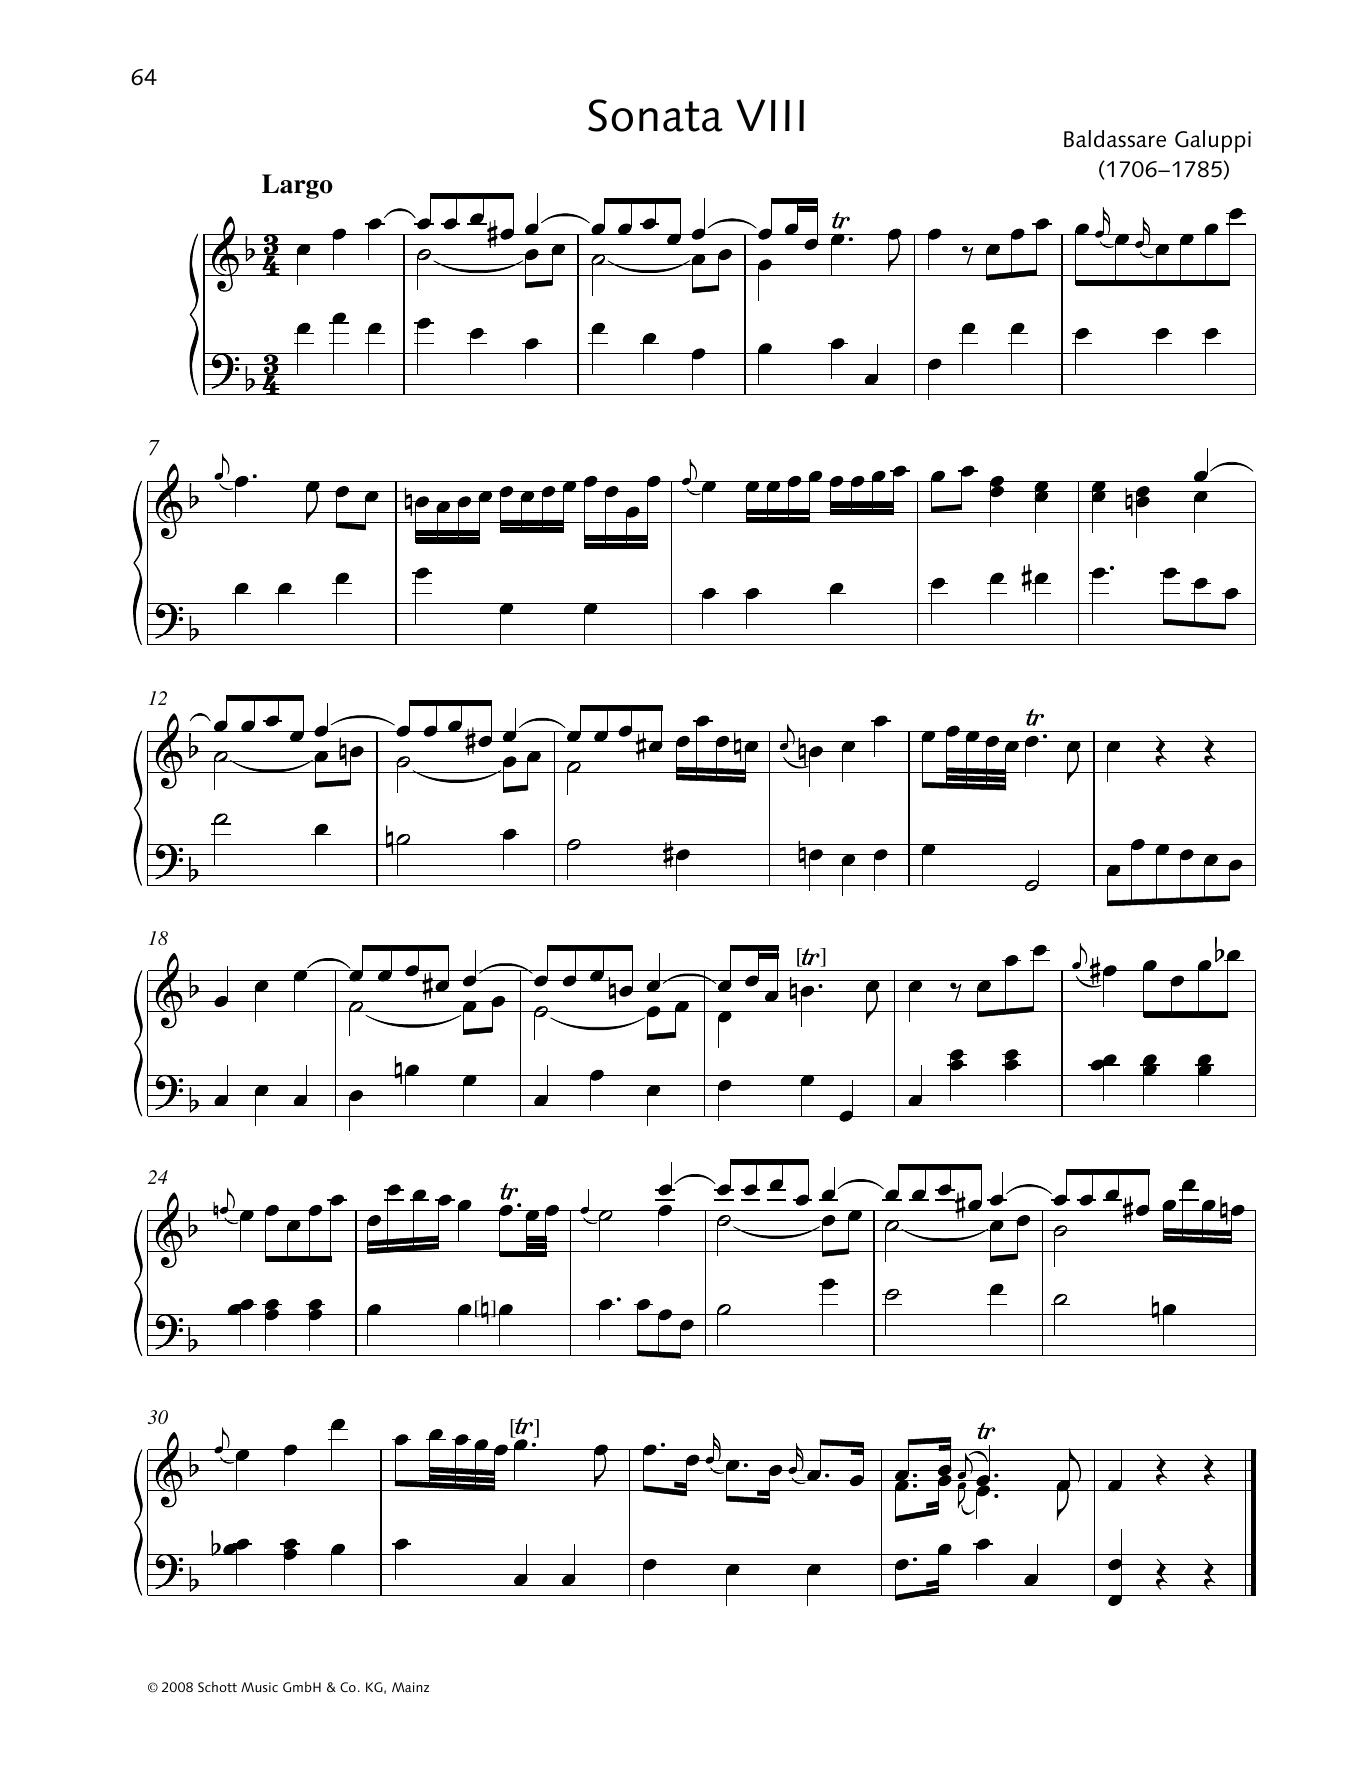 Baldassare Galuppi Sonata VIII F major sheet music notes and chords arranged for Piano Solo